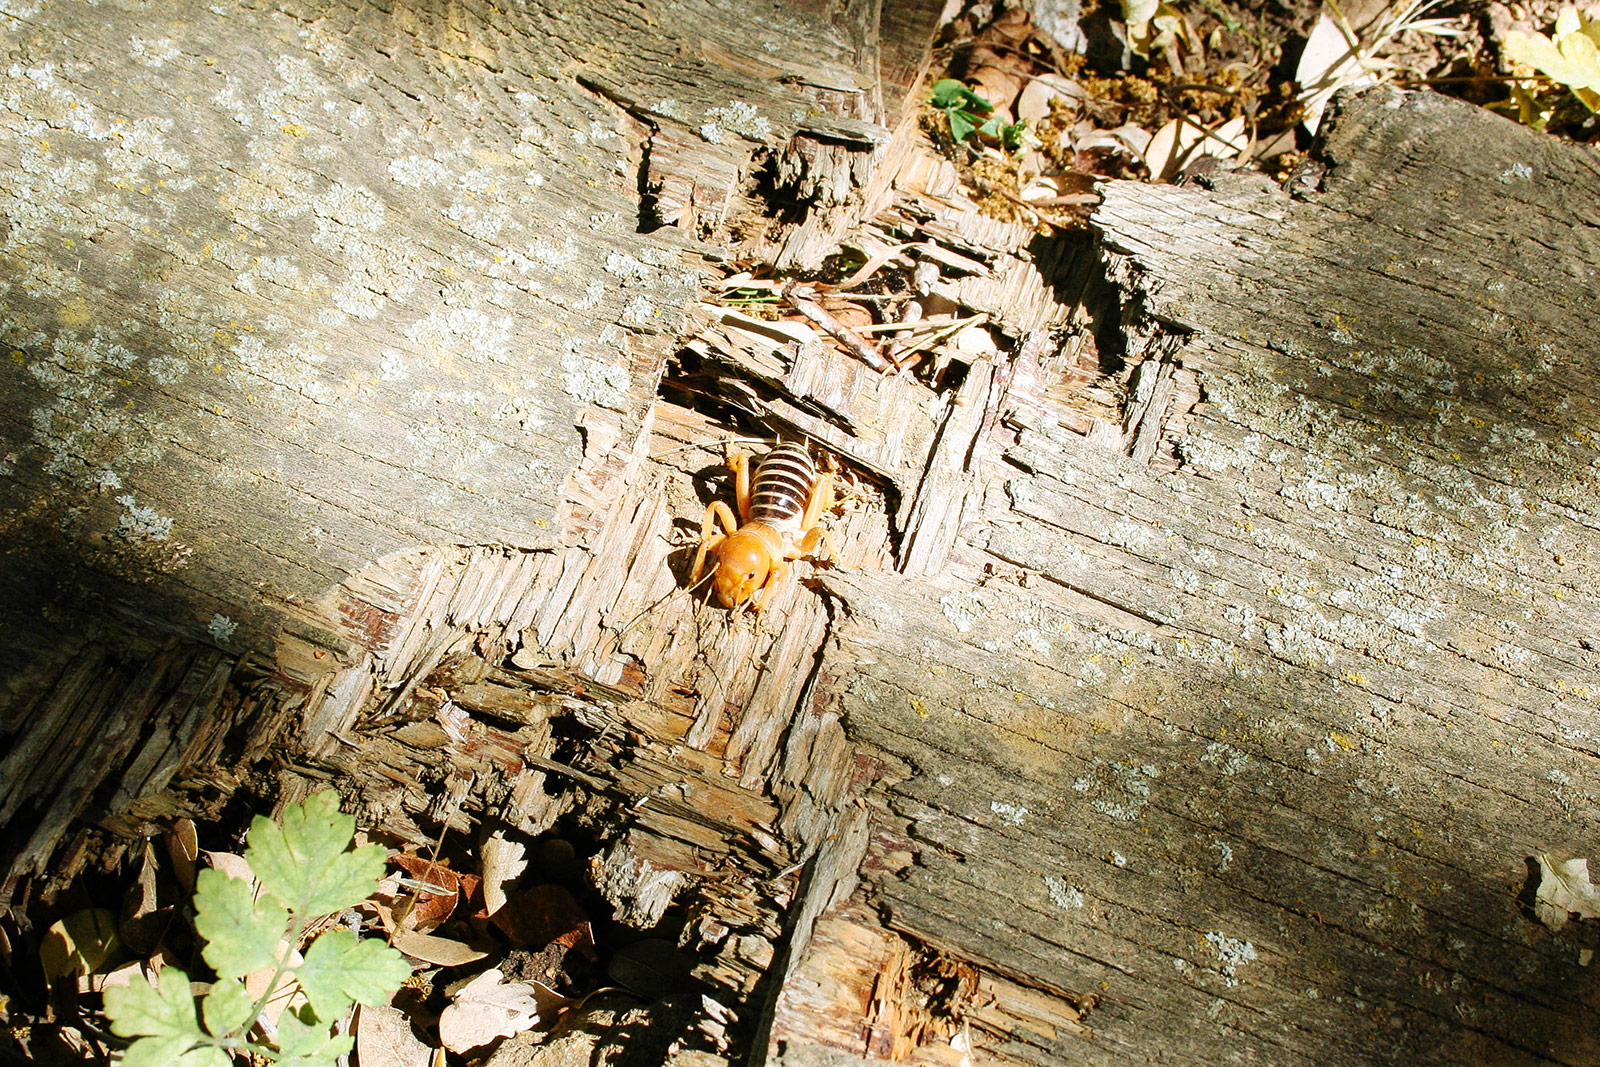 Jerusalem cricket (potato bug) crawling through decaying wood matter on the ground